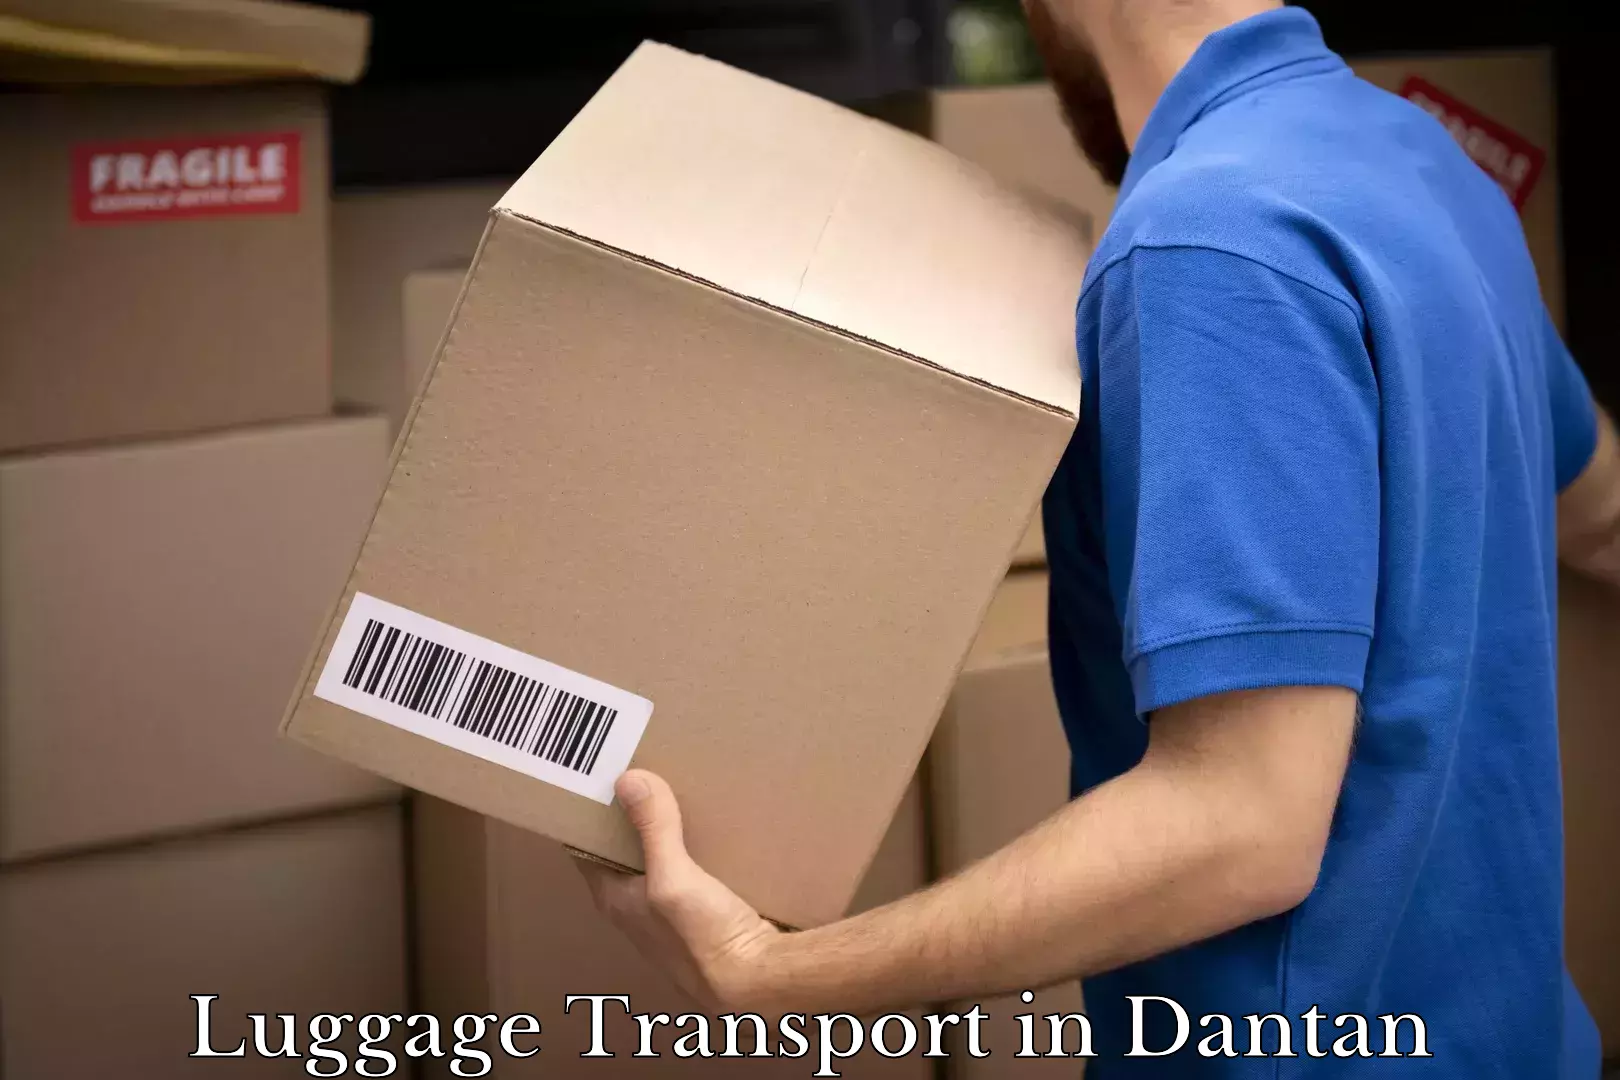 Luggage shipment processing in Dantan